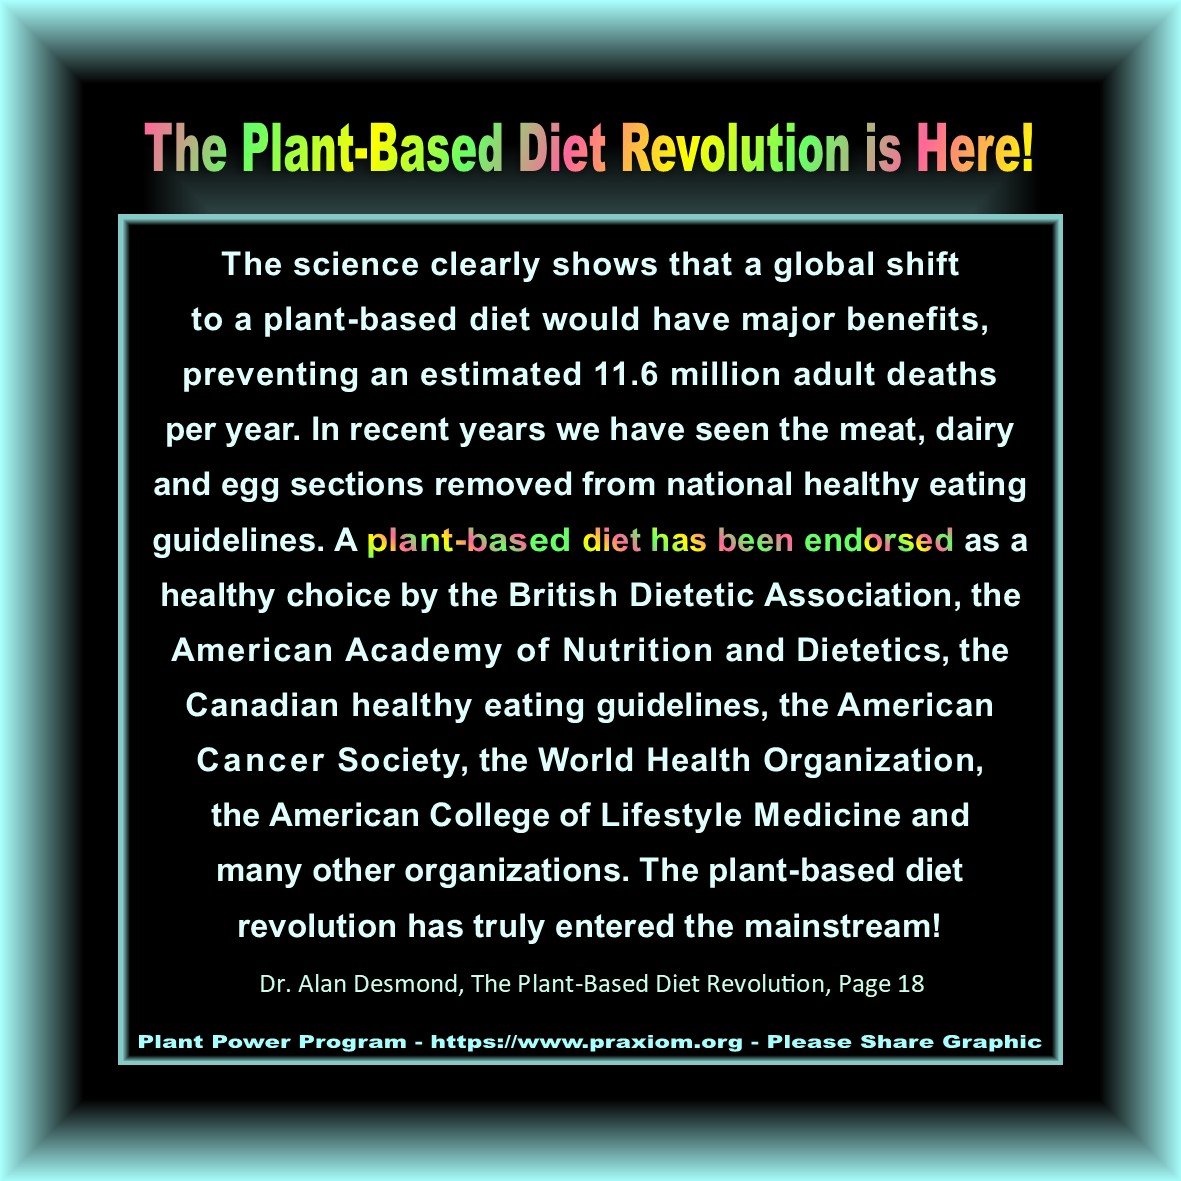 Plant Based Diet Revolution is Now Mainstream - Dr. Alan Desmond